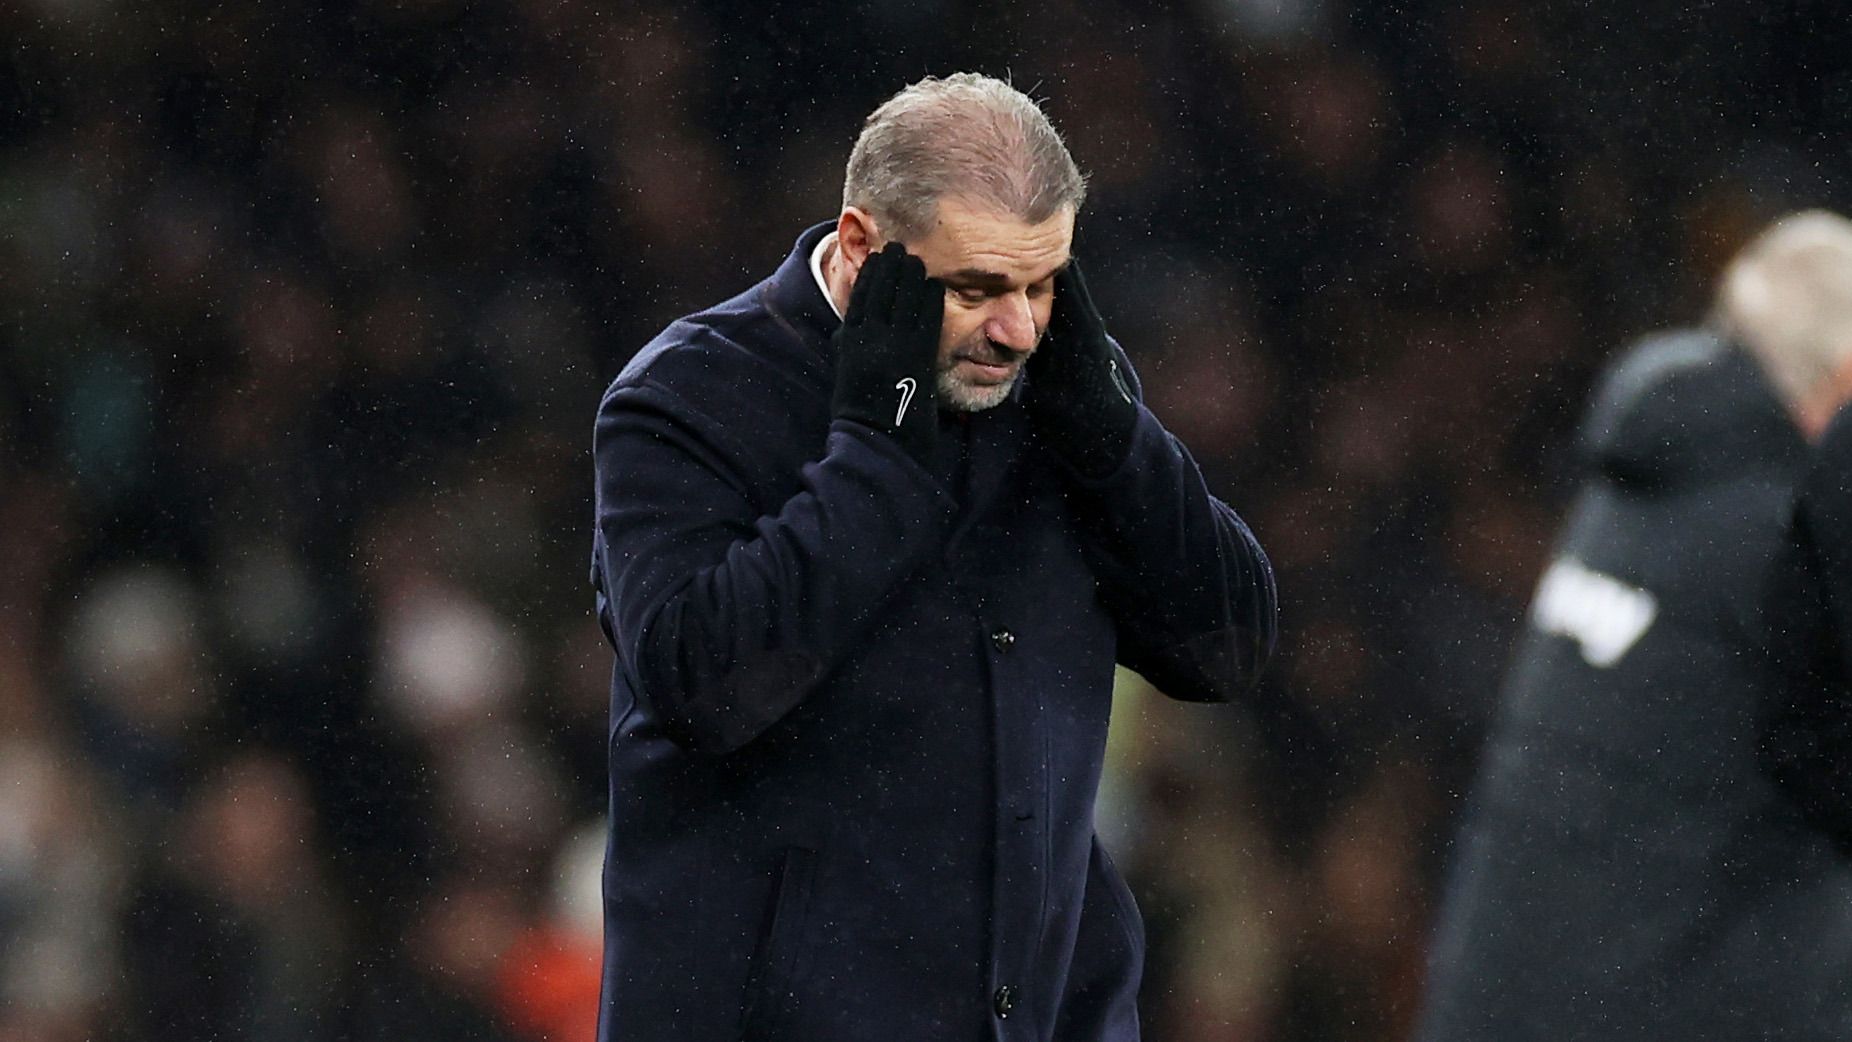 Ange Postecoglou, manager of Tottenham Hotspur, reacts during the Premier League match against West Ham United.